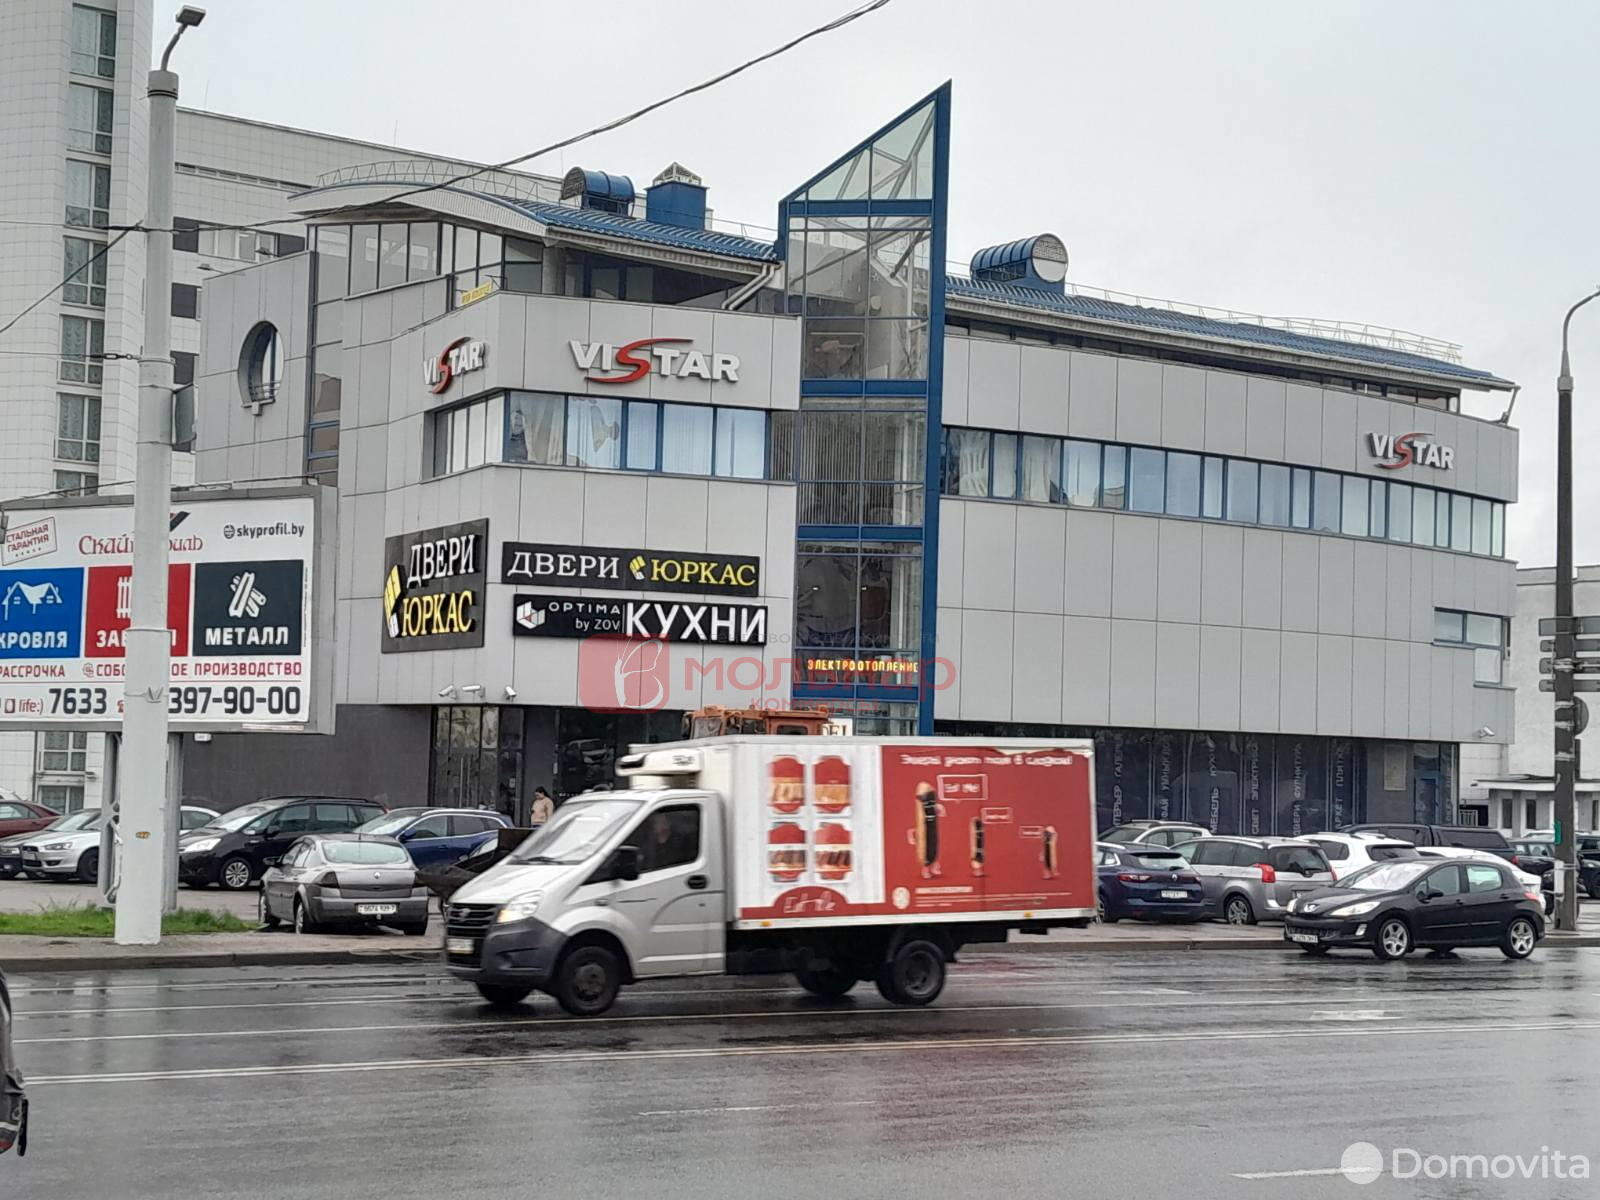 Аренда торговой точки на ул. Максима Богдановича, д. 153Б в Минске, 907BYN, код 964991 - фото 1